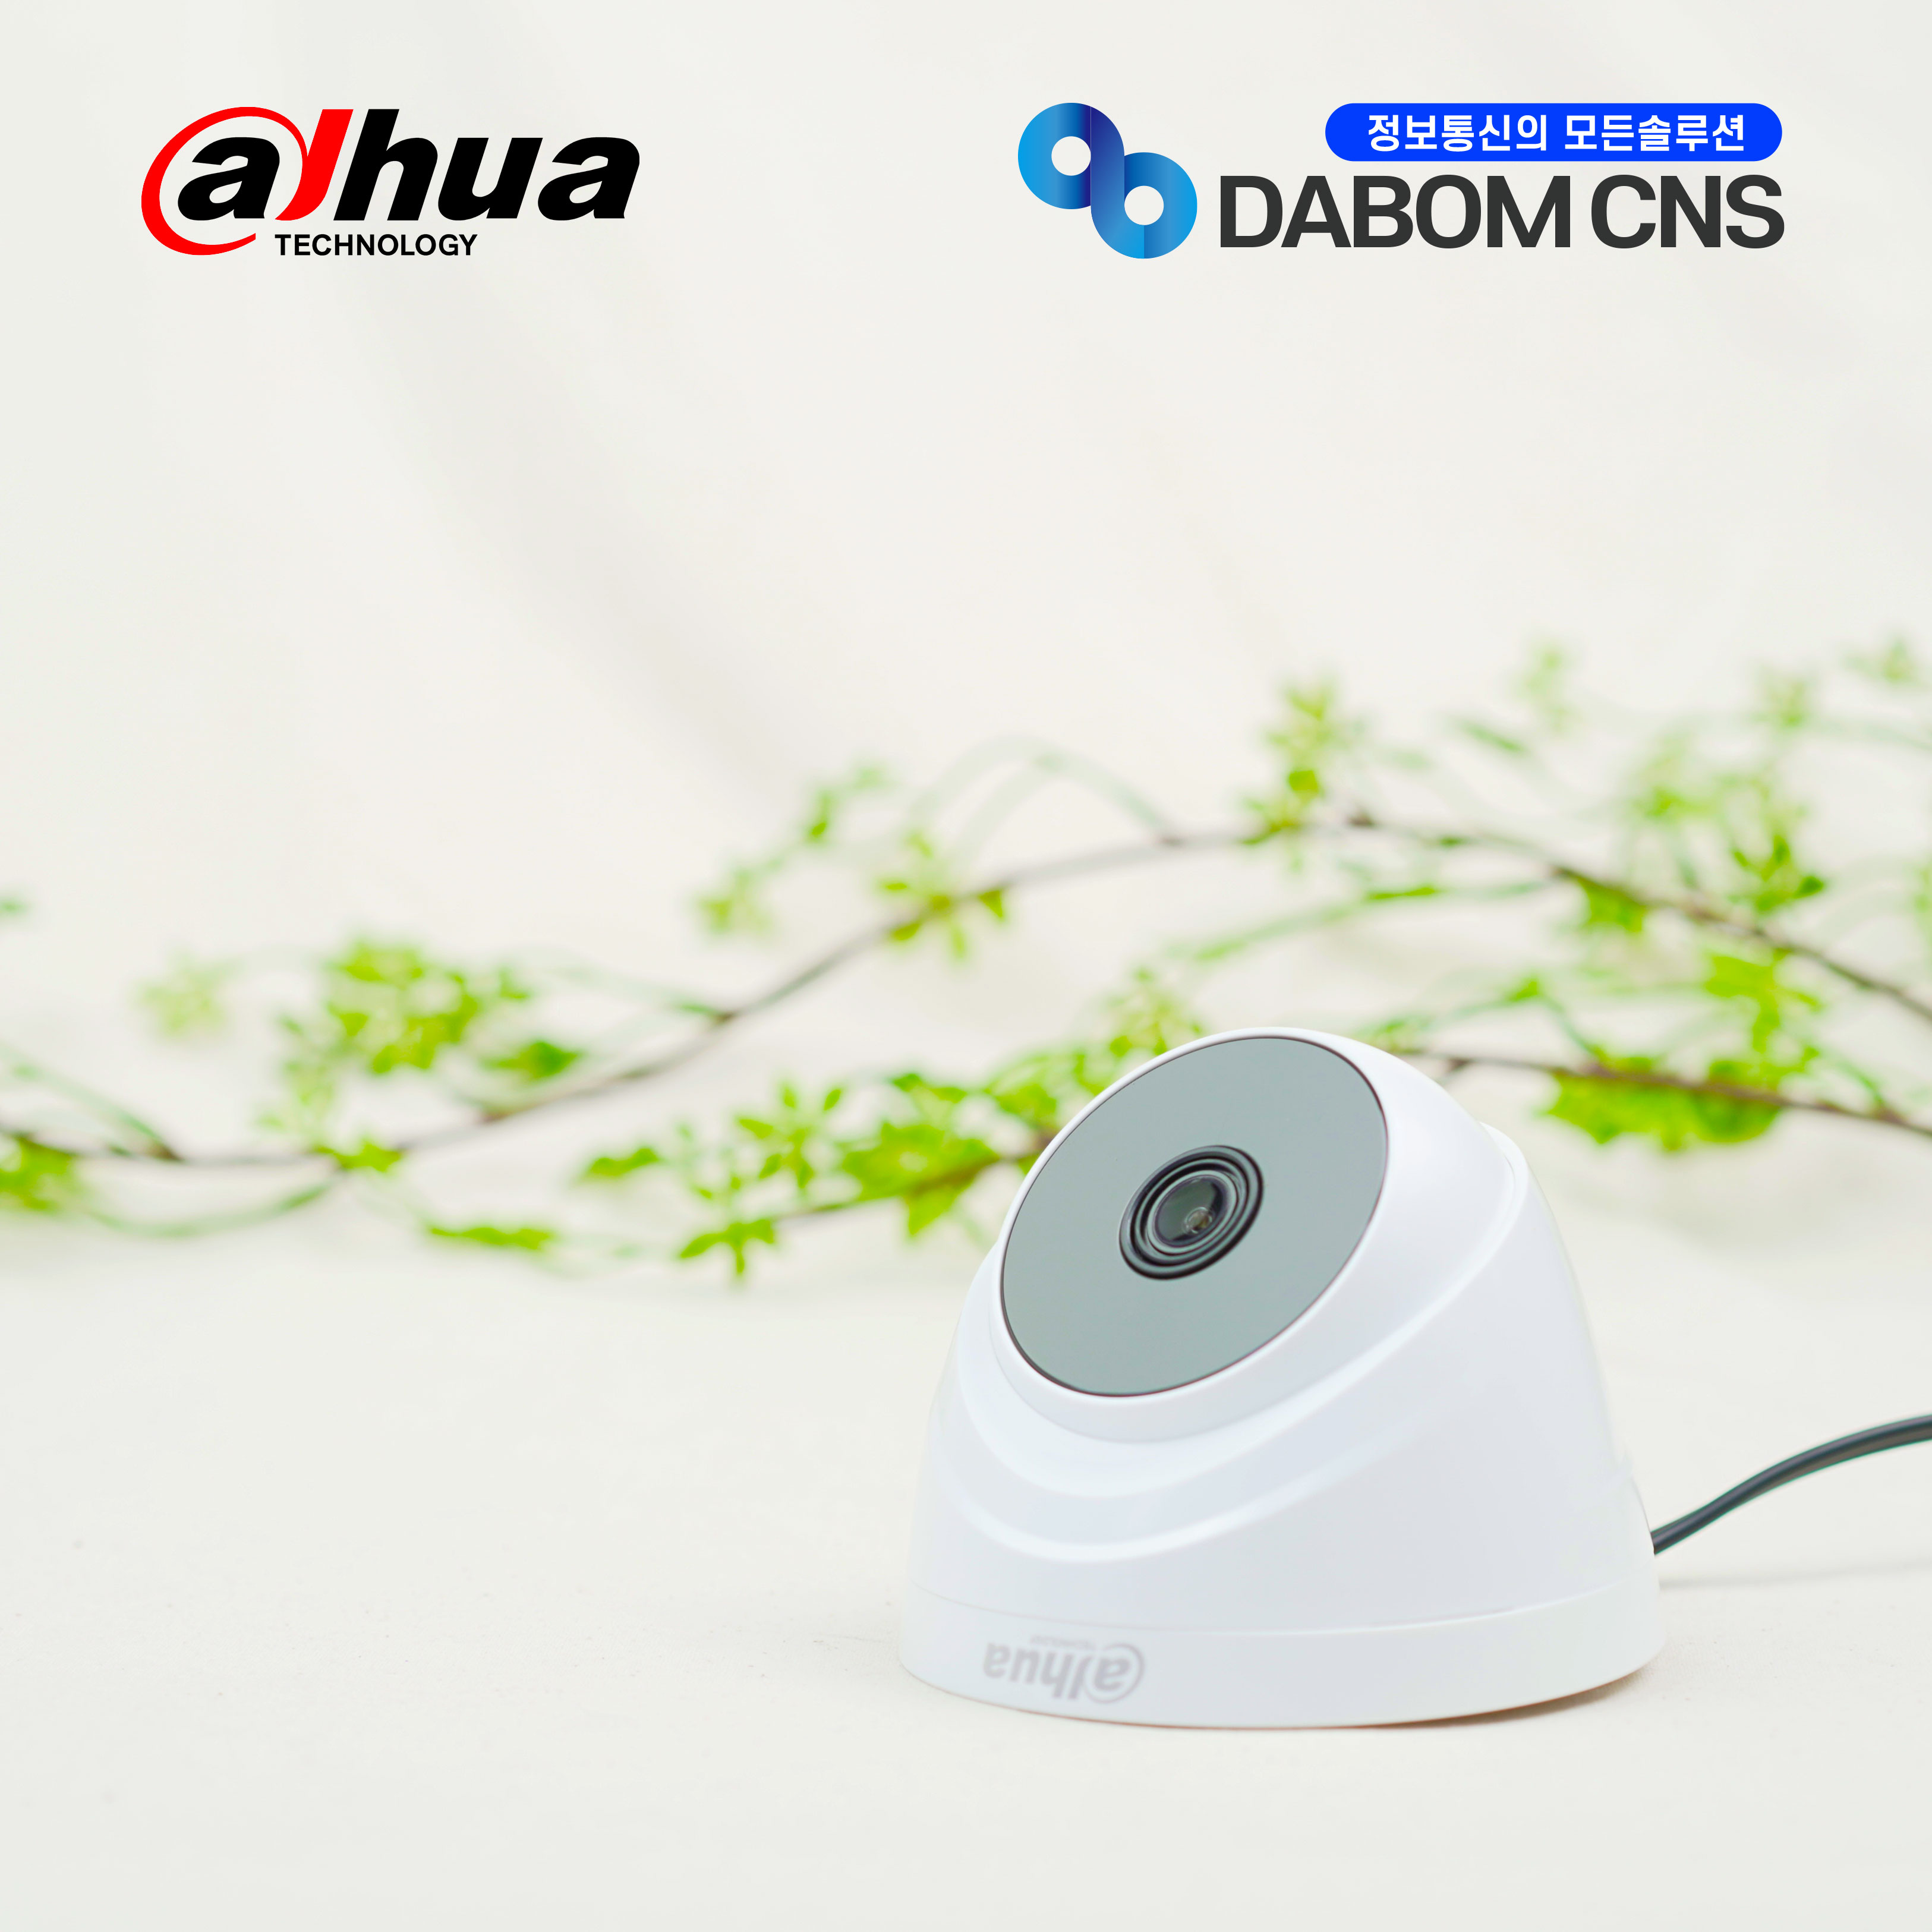 DAHUA HAC-T1A21N(3.6mm) 2MP Analog Indoor Camera CCTV Camera